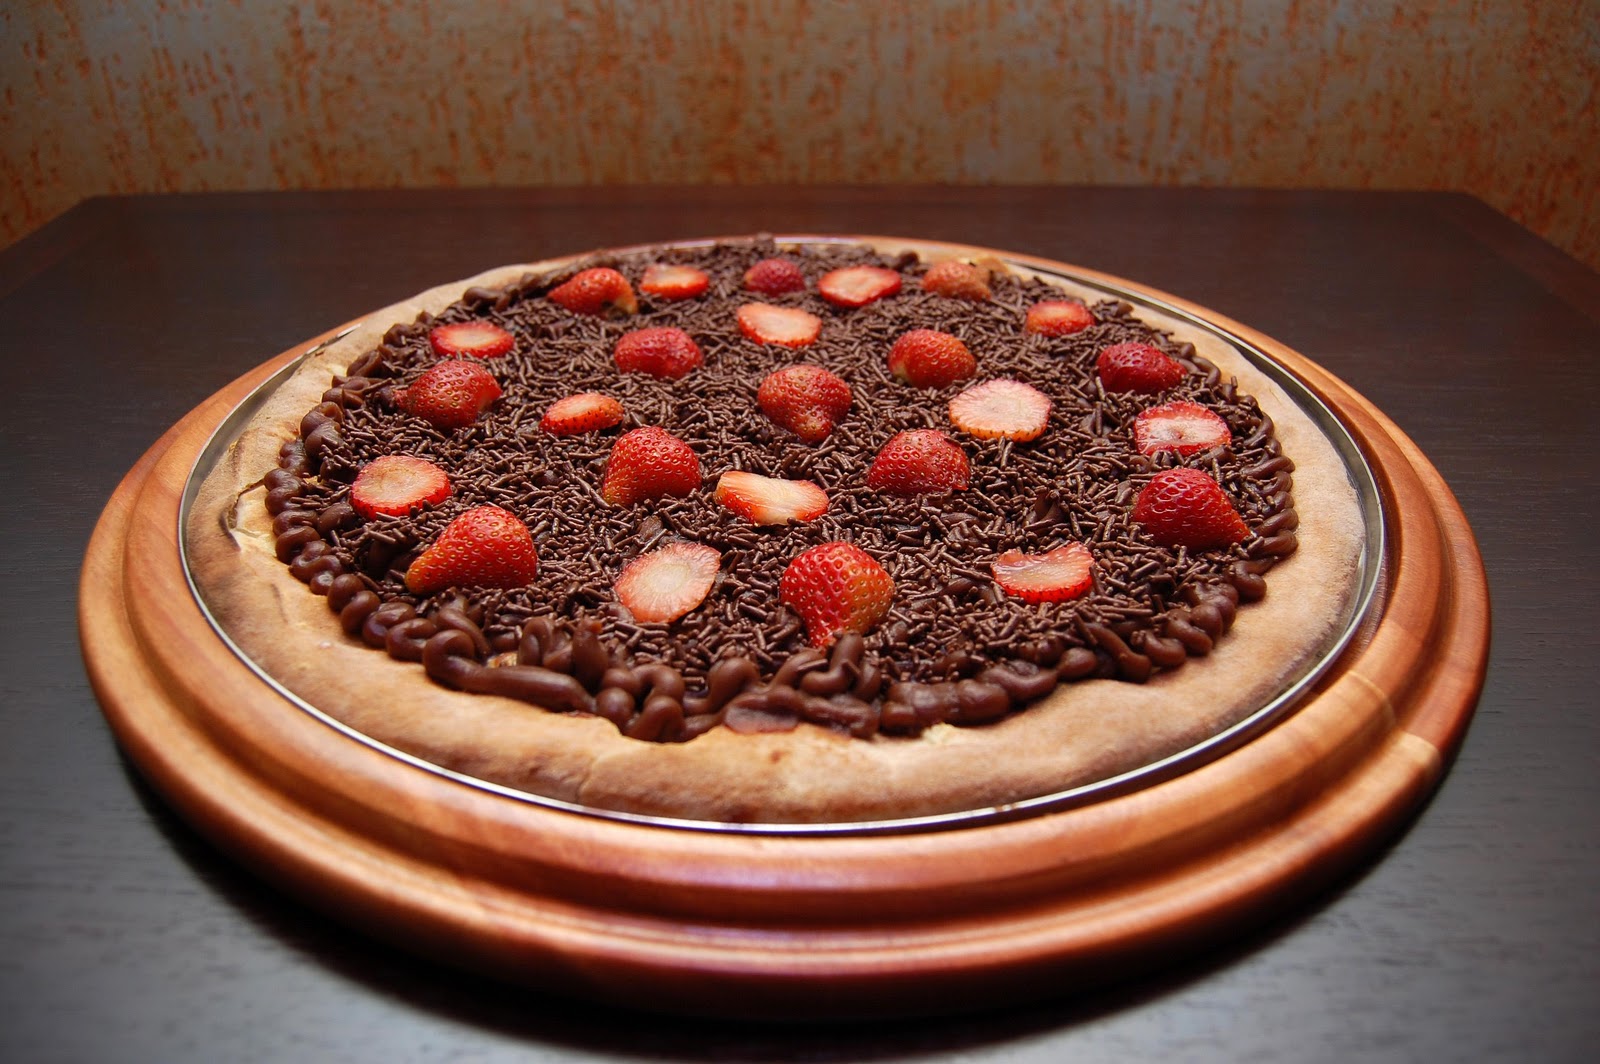 шоколадную пиццу рецепт фото 83